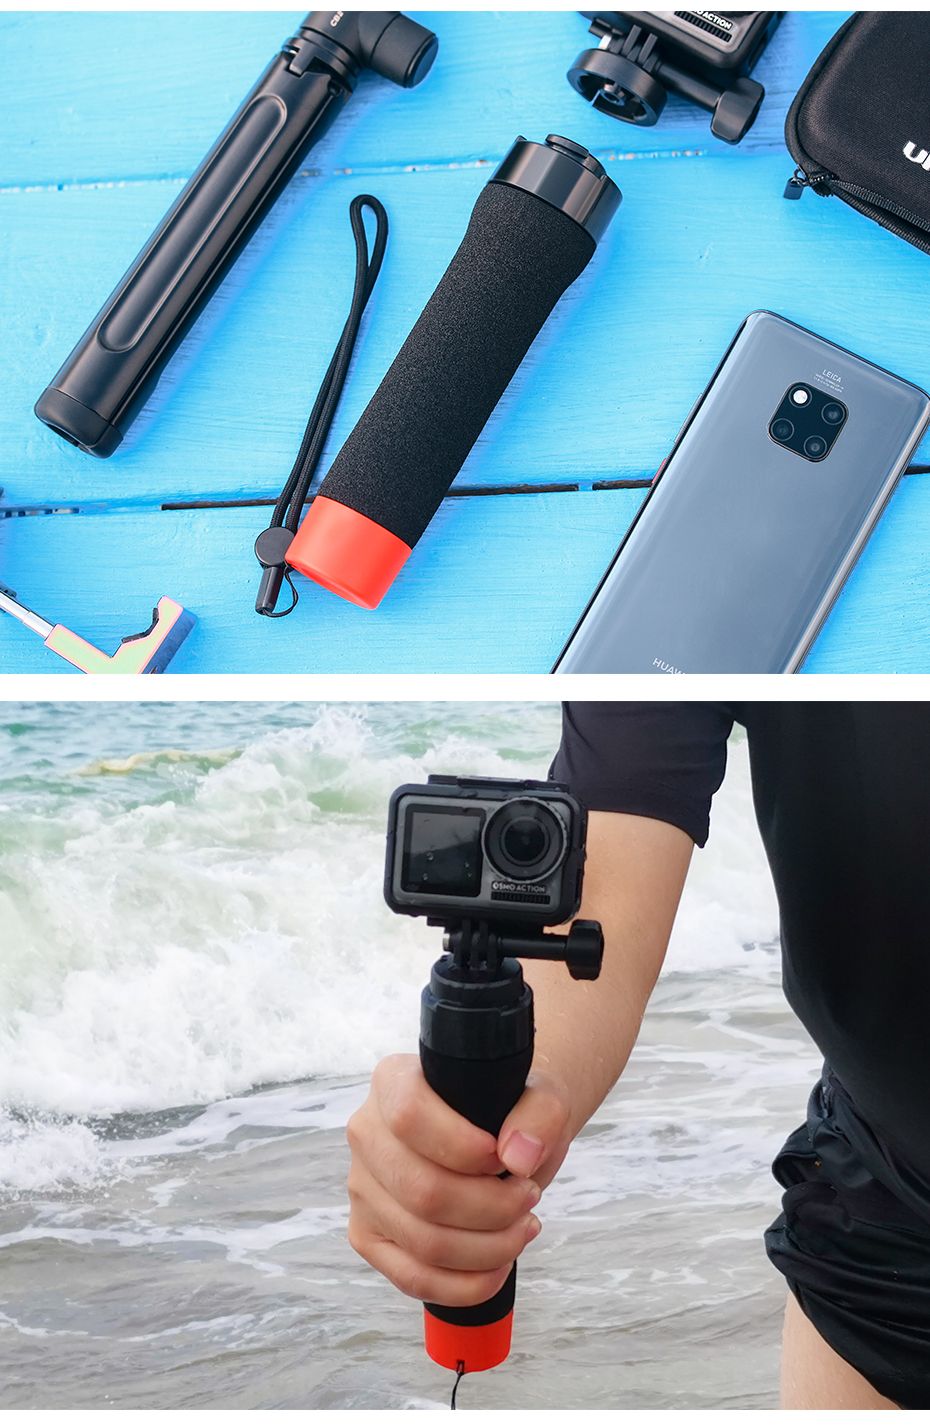 ULANZI-U-11-Floating-Floaty-Selfie-Stick-for-GoPro-Hero-Eken-Xiaoyi-DJI-OSMO-Action-Sports-Camera-1556275